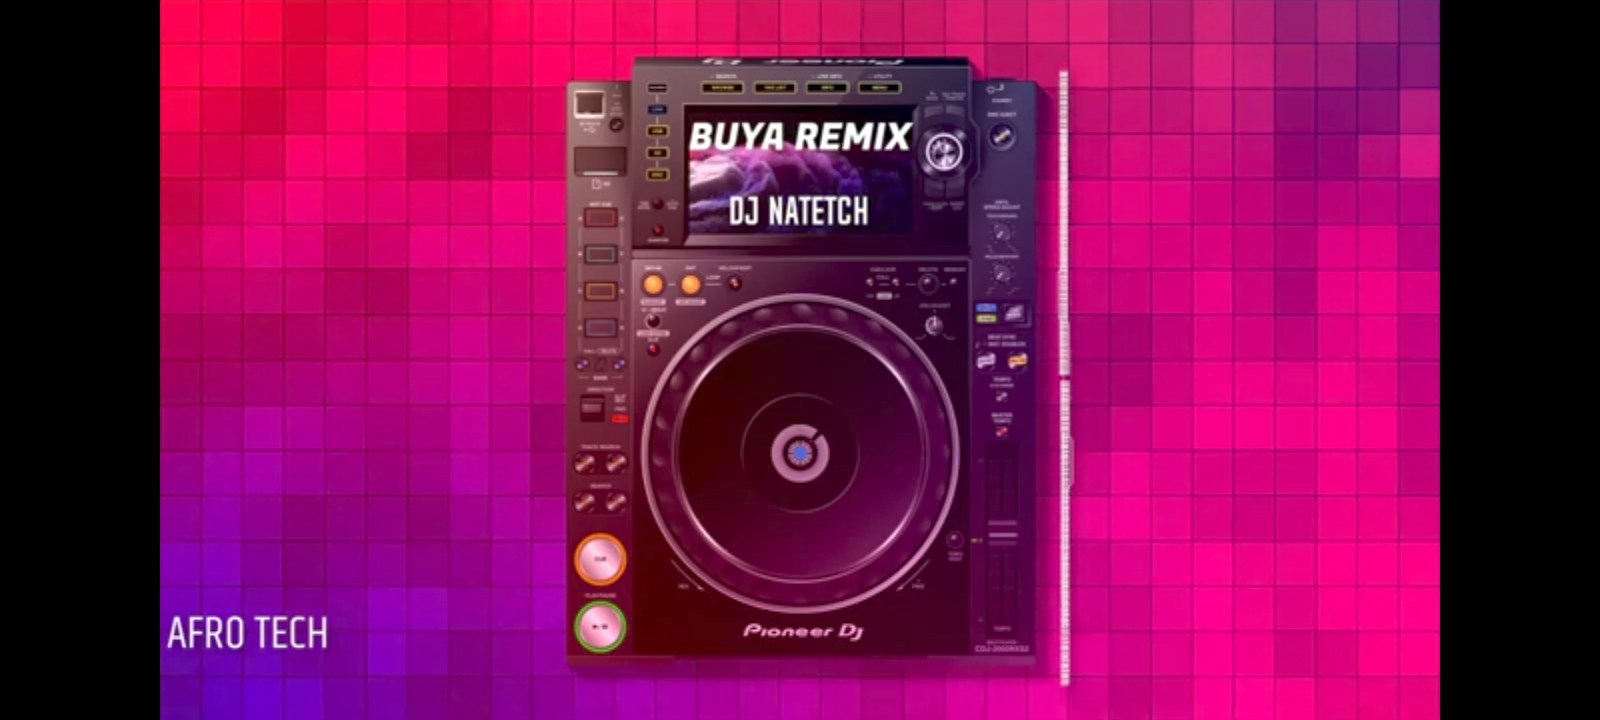 Buya Remix - Dj Natetch